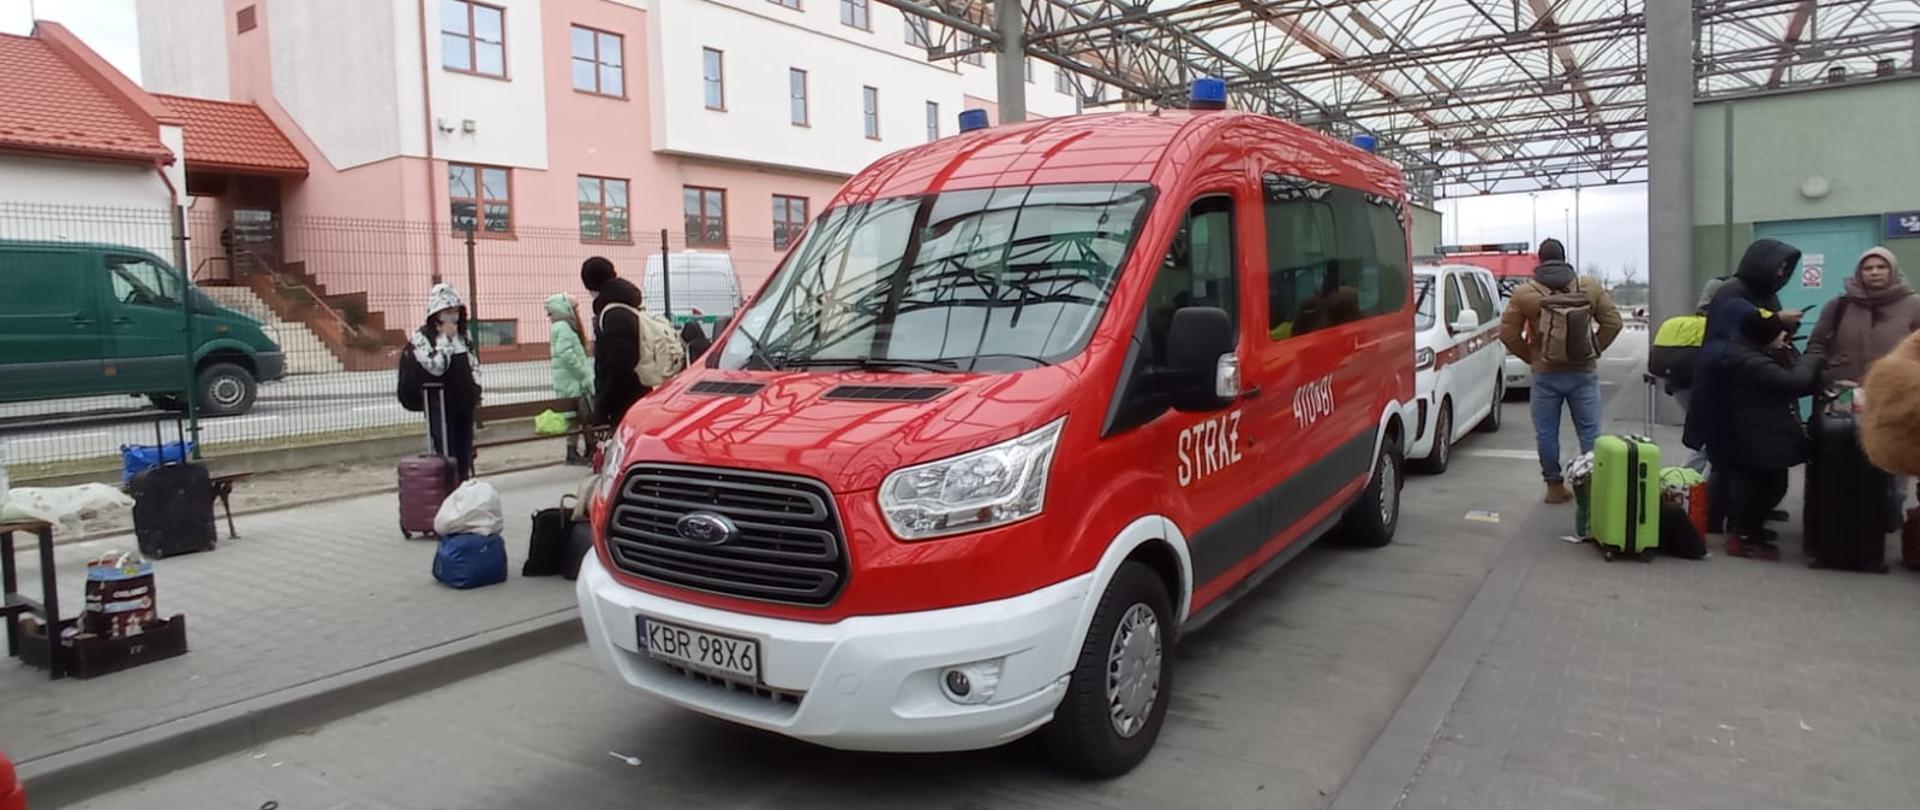 Samochód PSP Brzesko podczas transportu obywateli Ukrainy